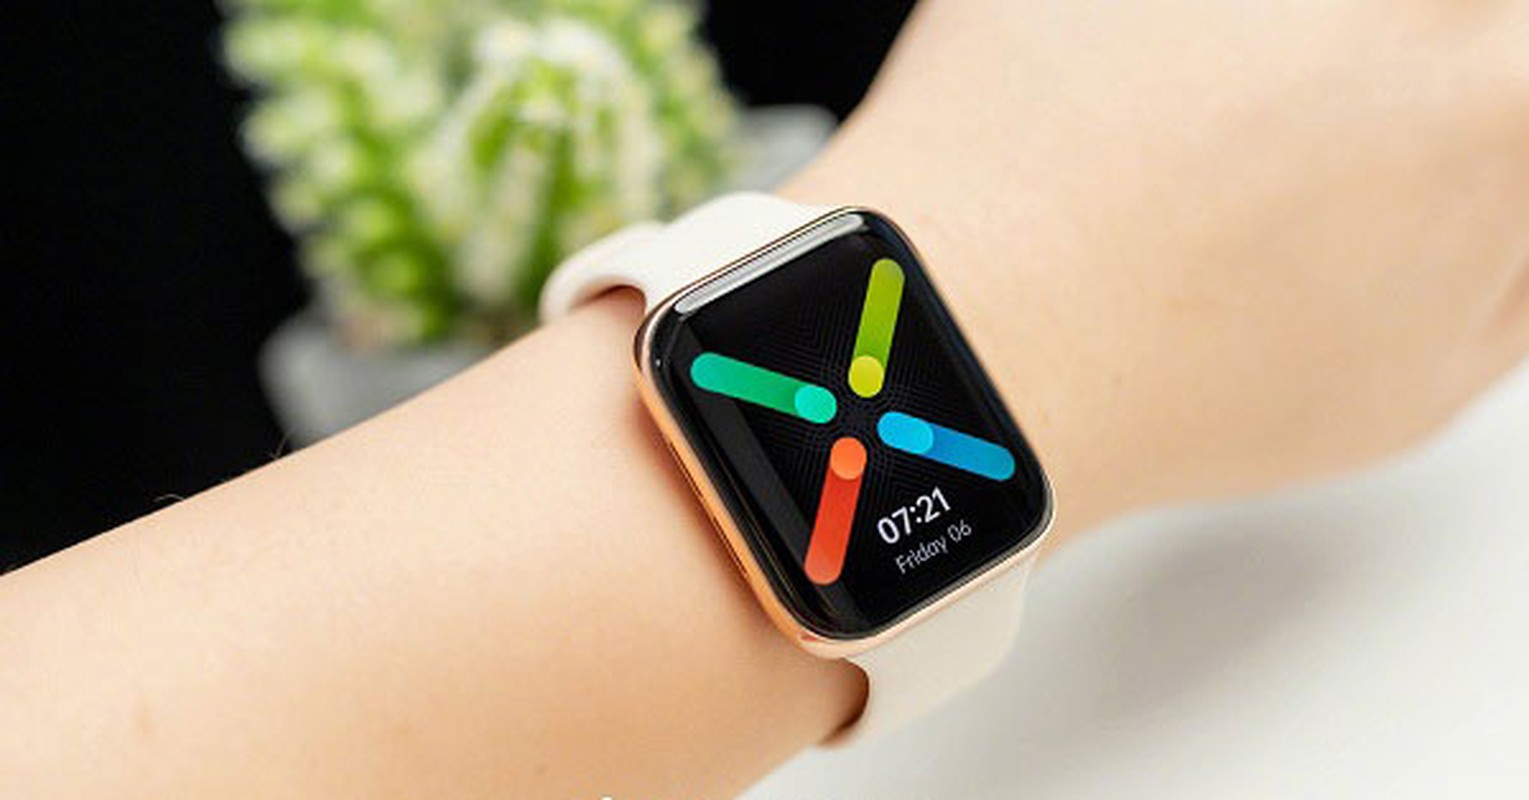 OPPO Watch tai Viet Nam co “dang gom” so voi Apple Watch?-Hinh-10